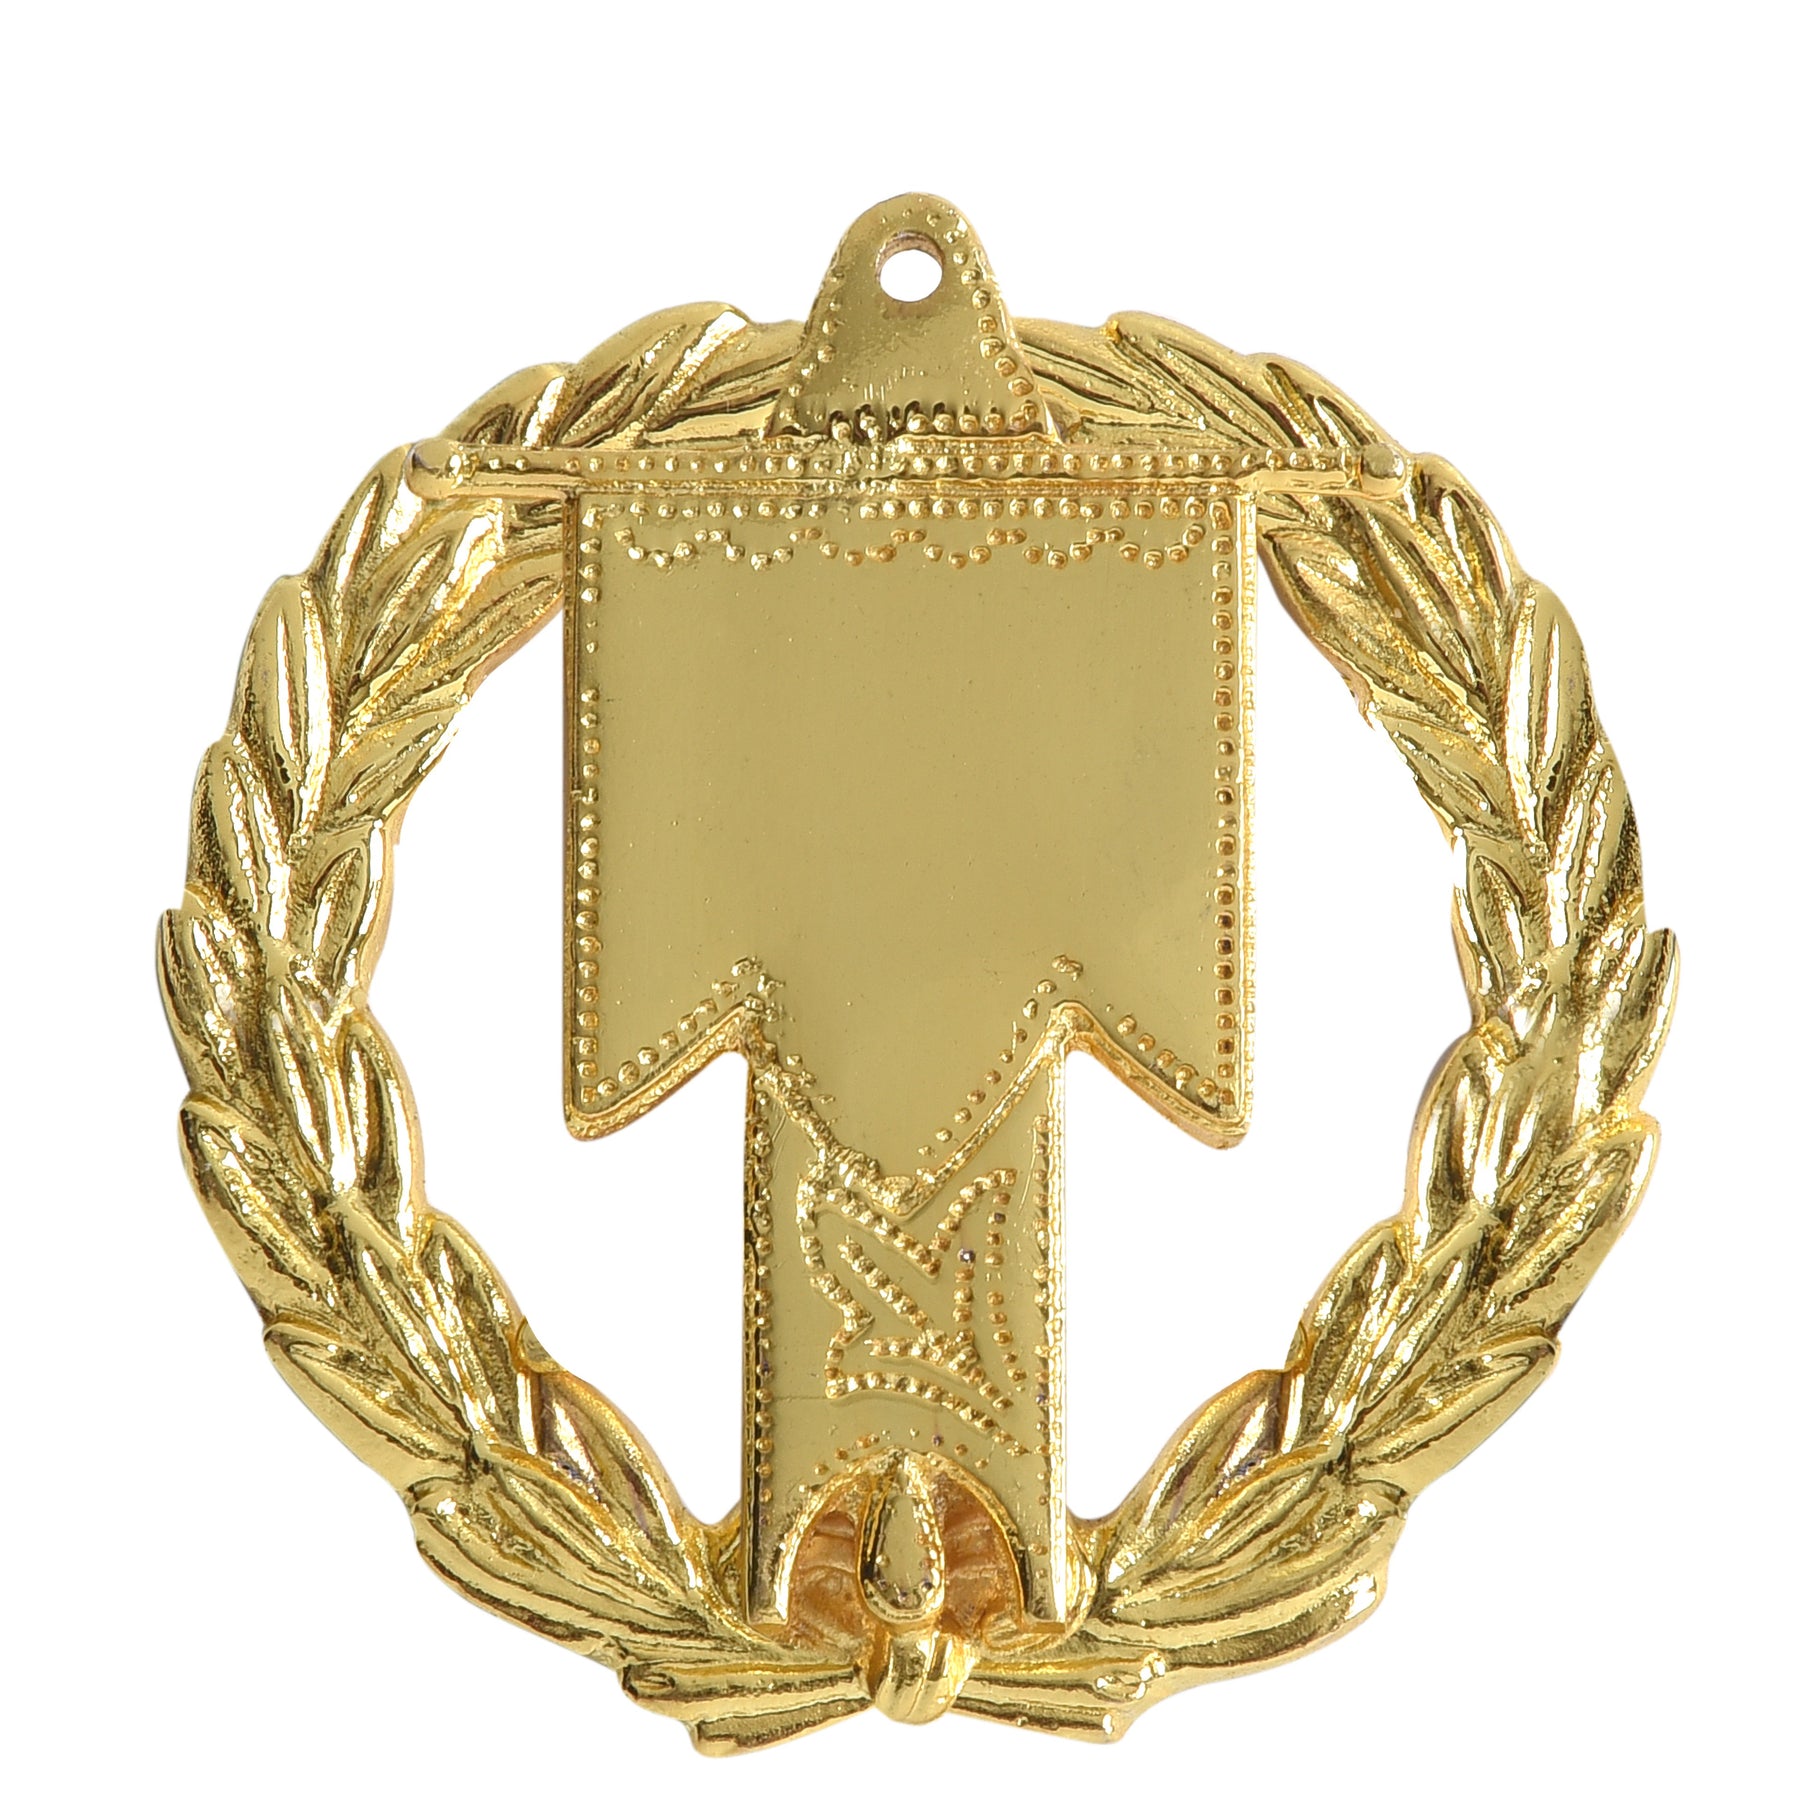 Grand Standard Bearer Knights Templar Commandery Officer Collar Jewel - Gold Plated - Bricks Masons